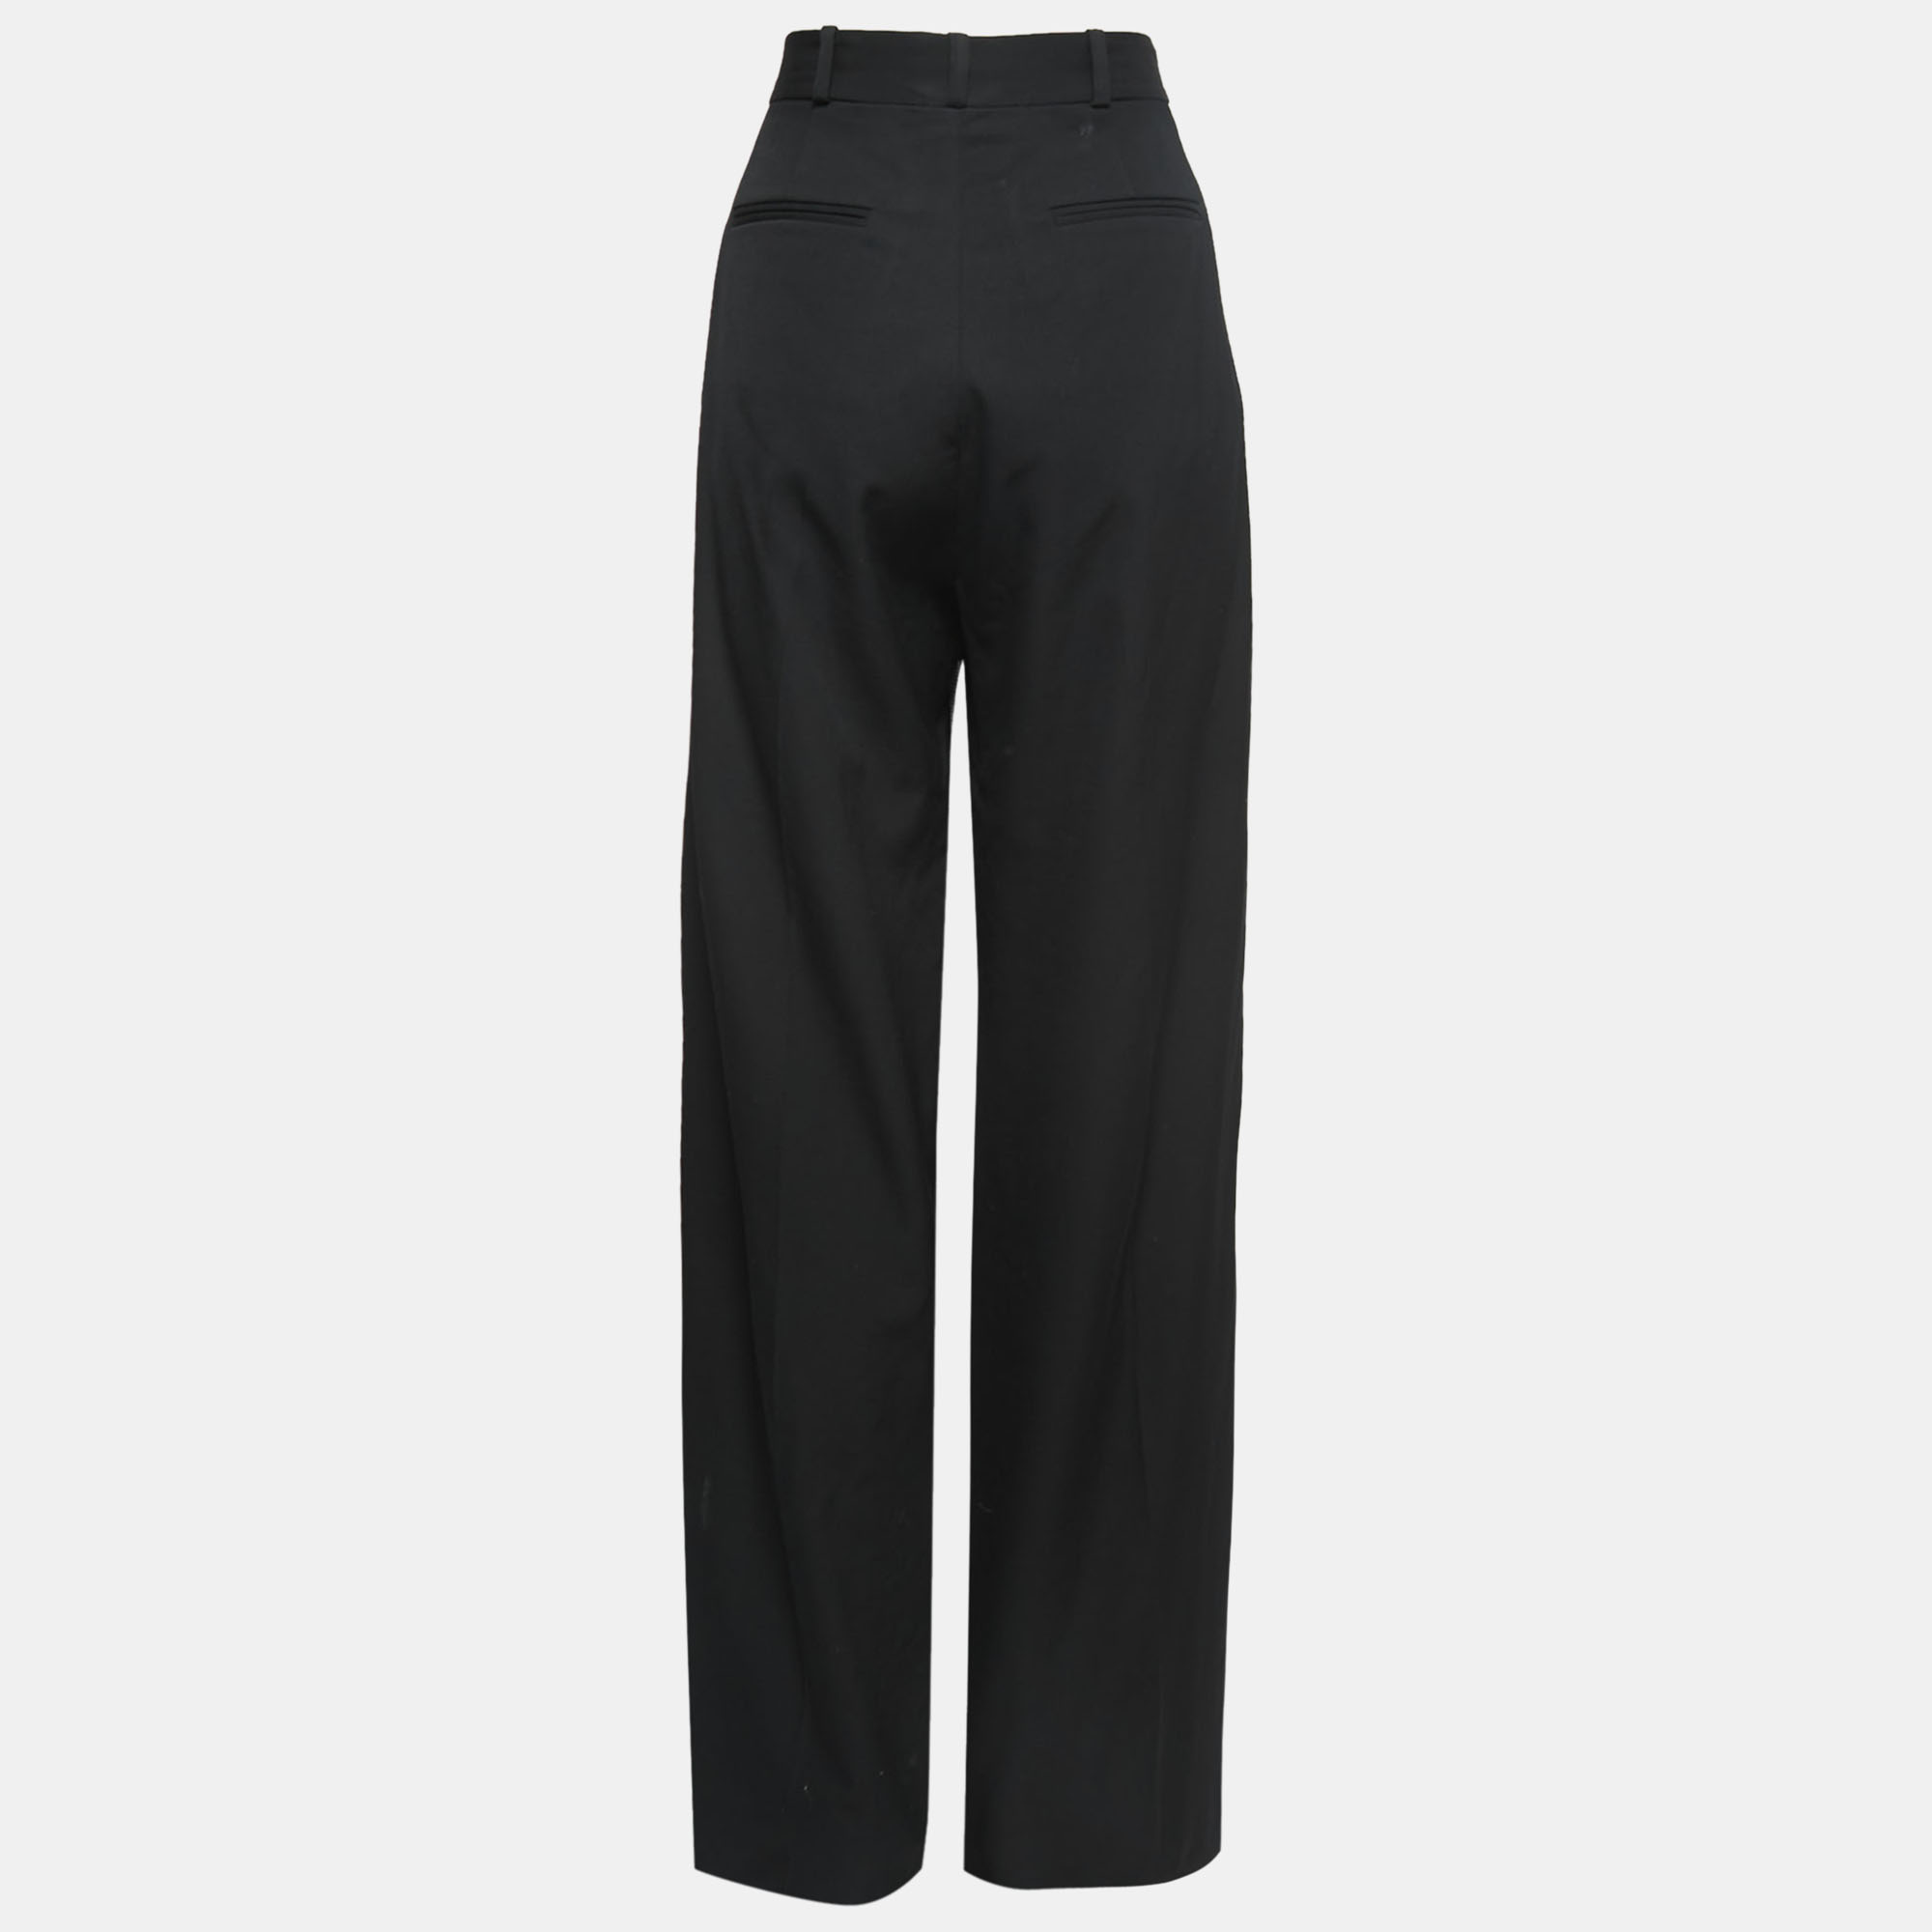 

Stella McCartney Grey Checked & Black Paneled Wool Straight Leg Pants